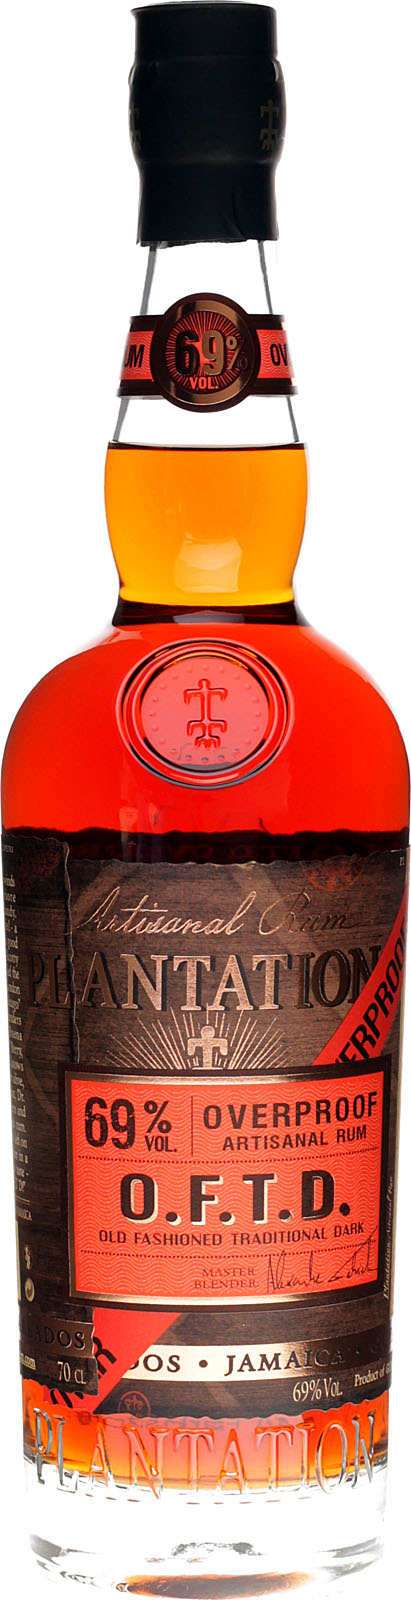 Plantation O.F.T.D. Overproof aus Karibik Rum der